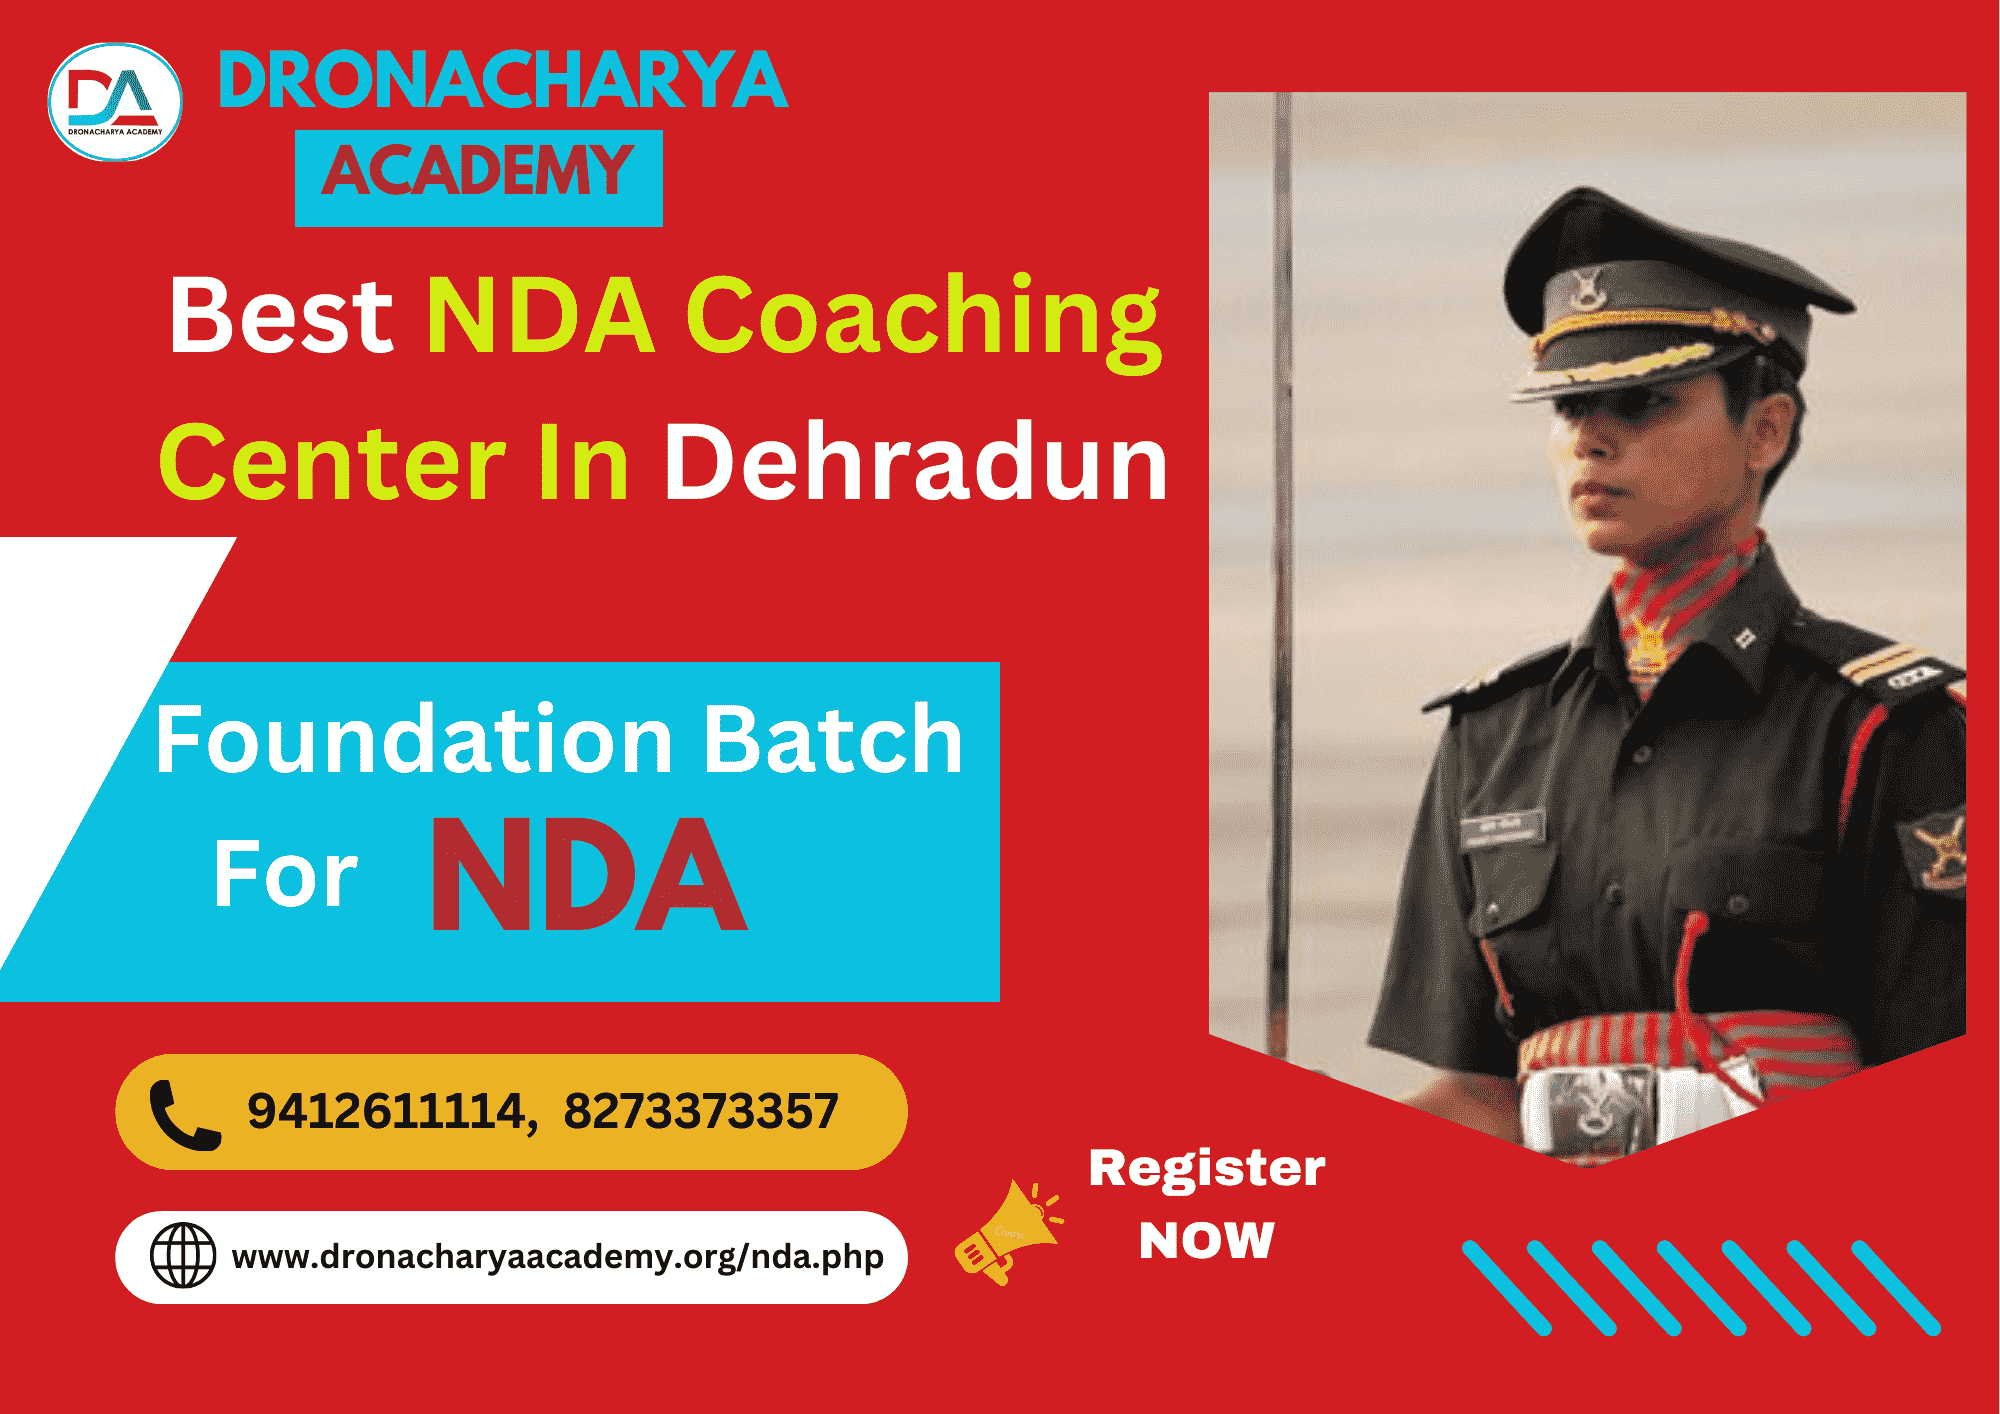 The Best NDA Coaching in Dehradun at Dronacharya Academy